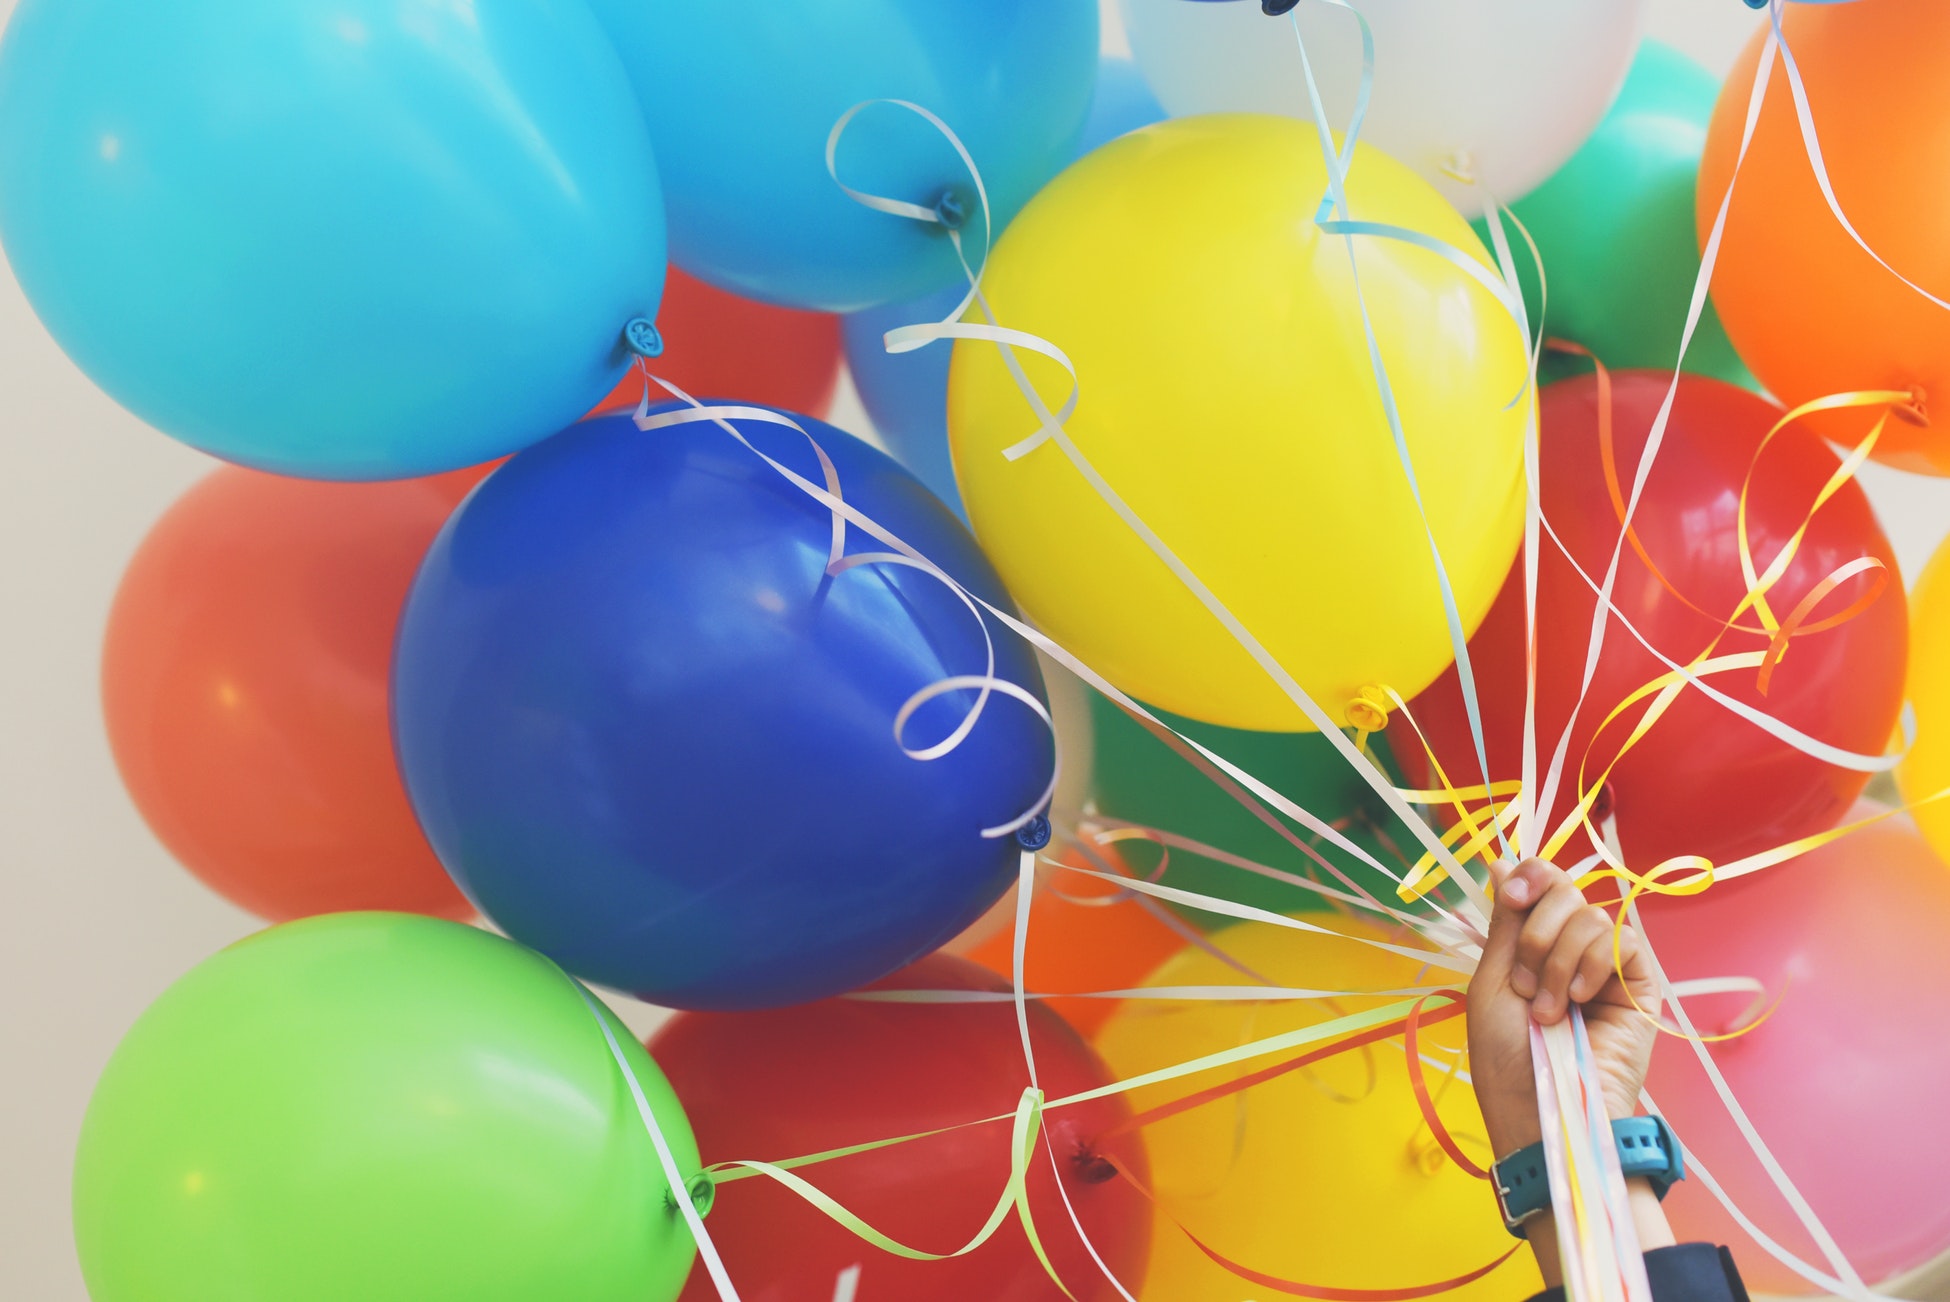 Celebratory Balloons